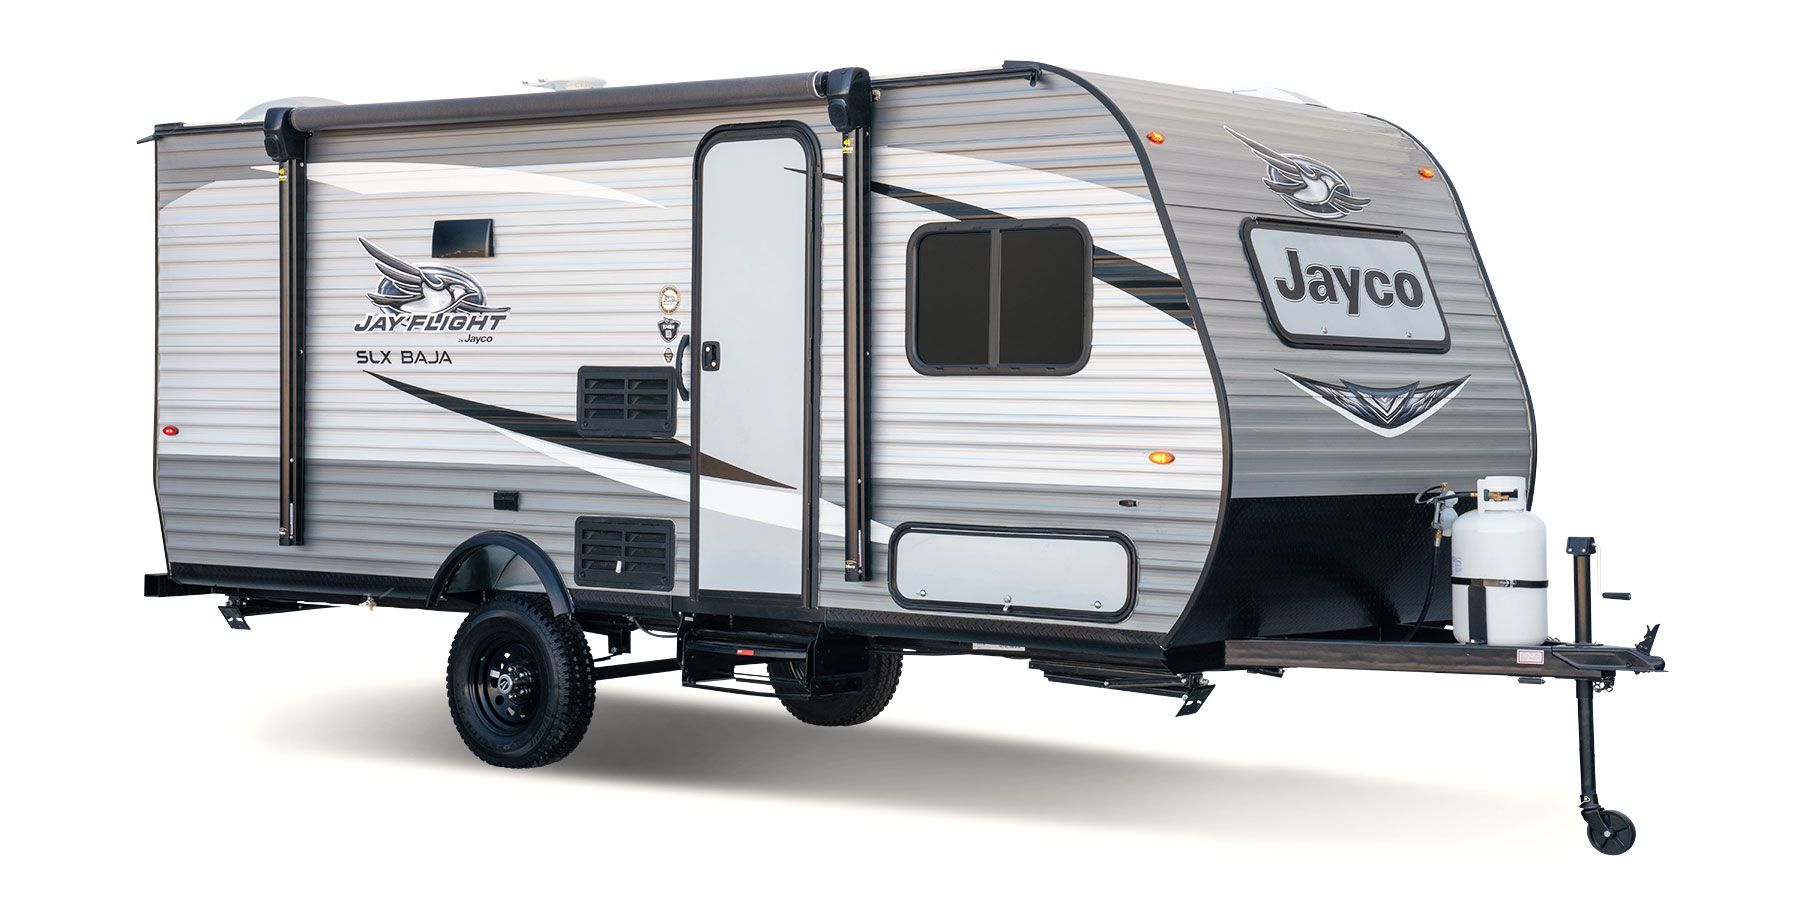 jayco travel trailers ratings